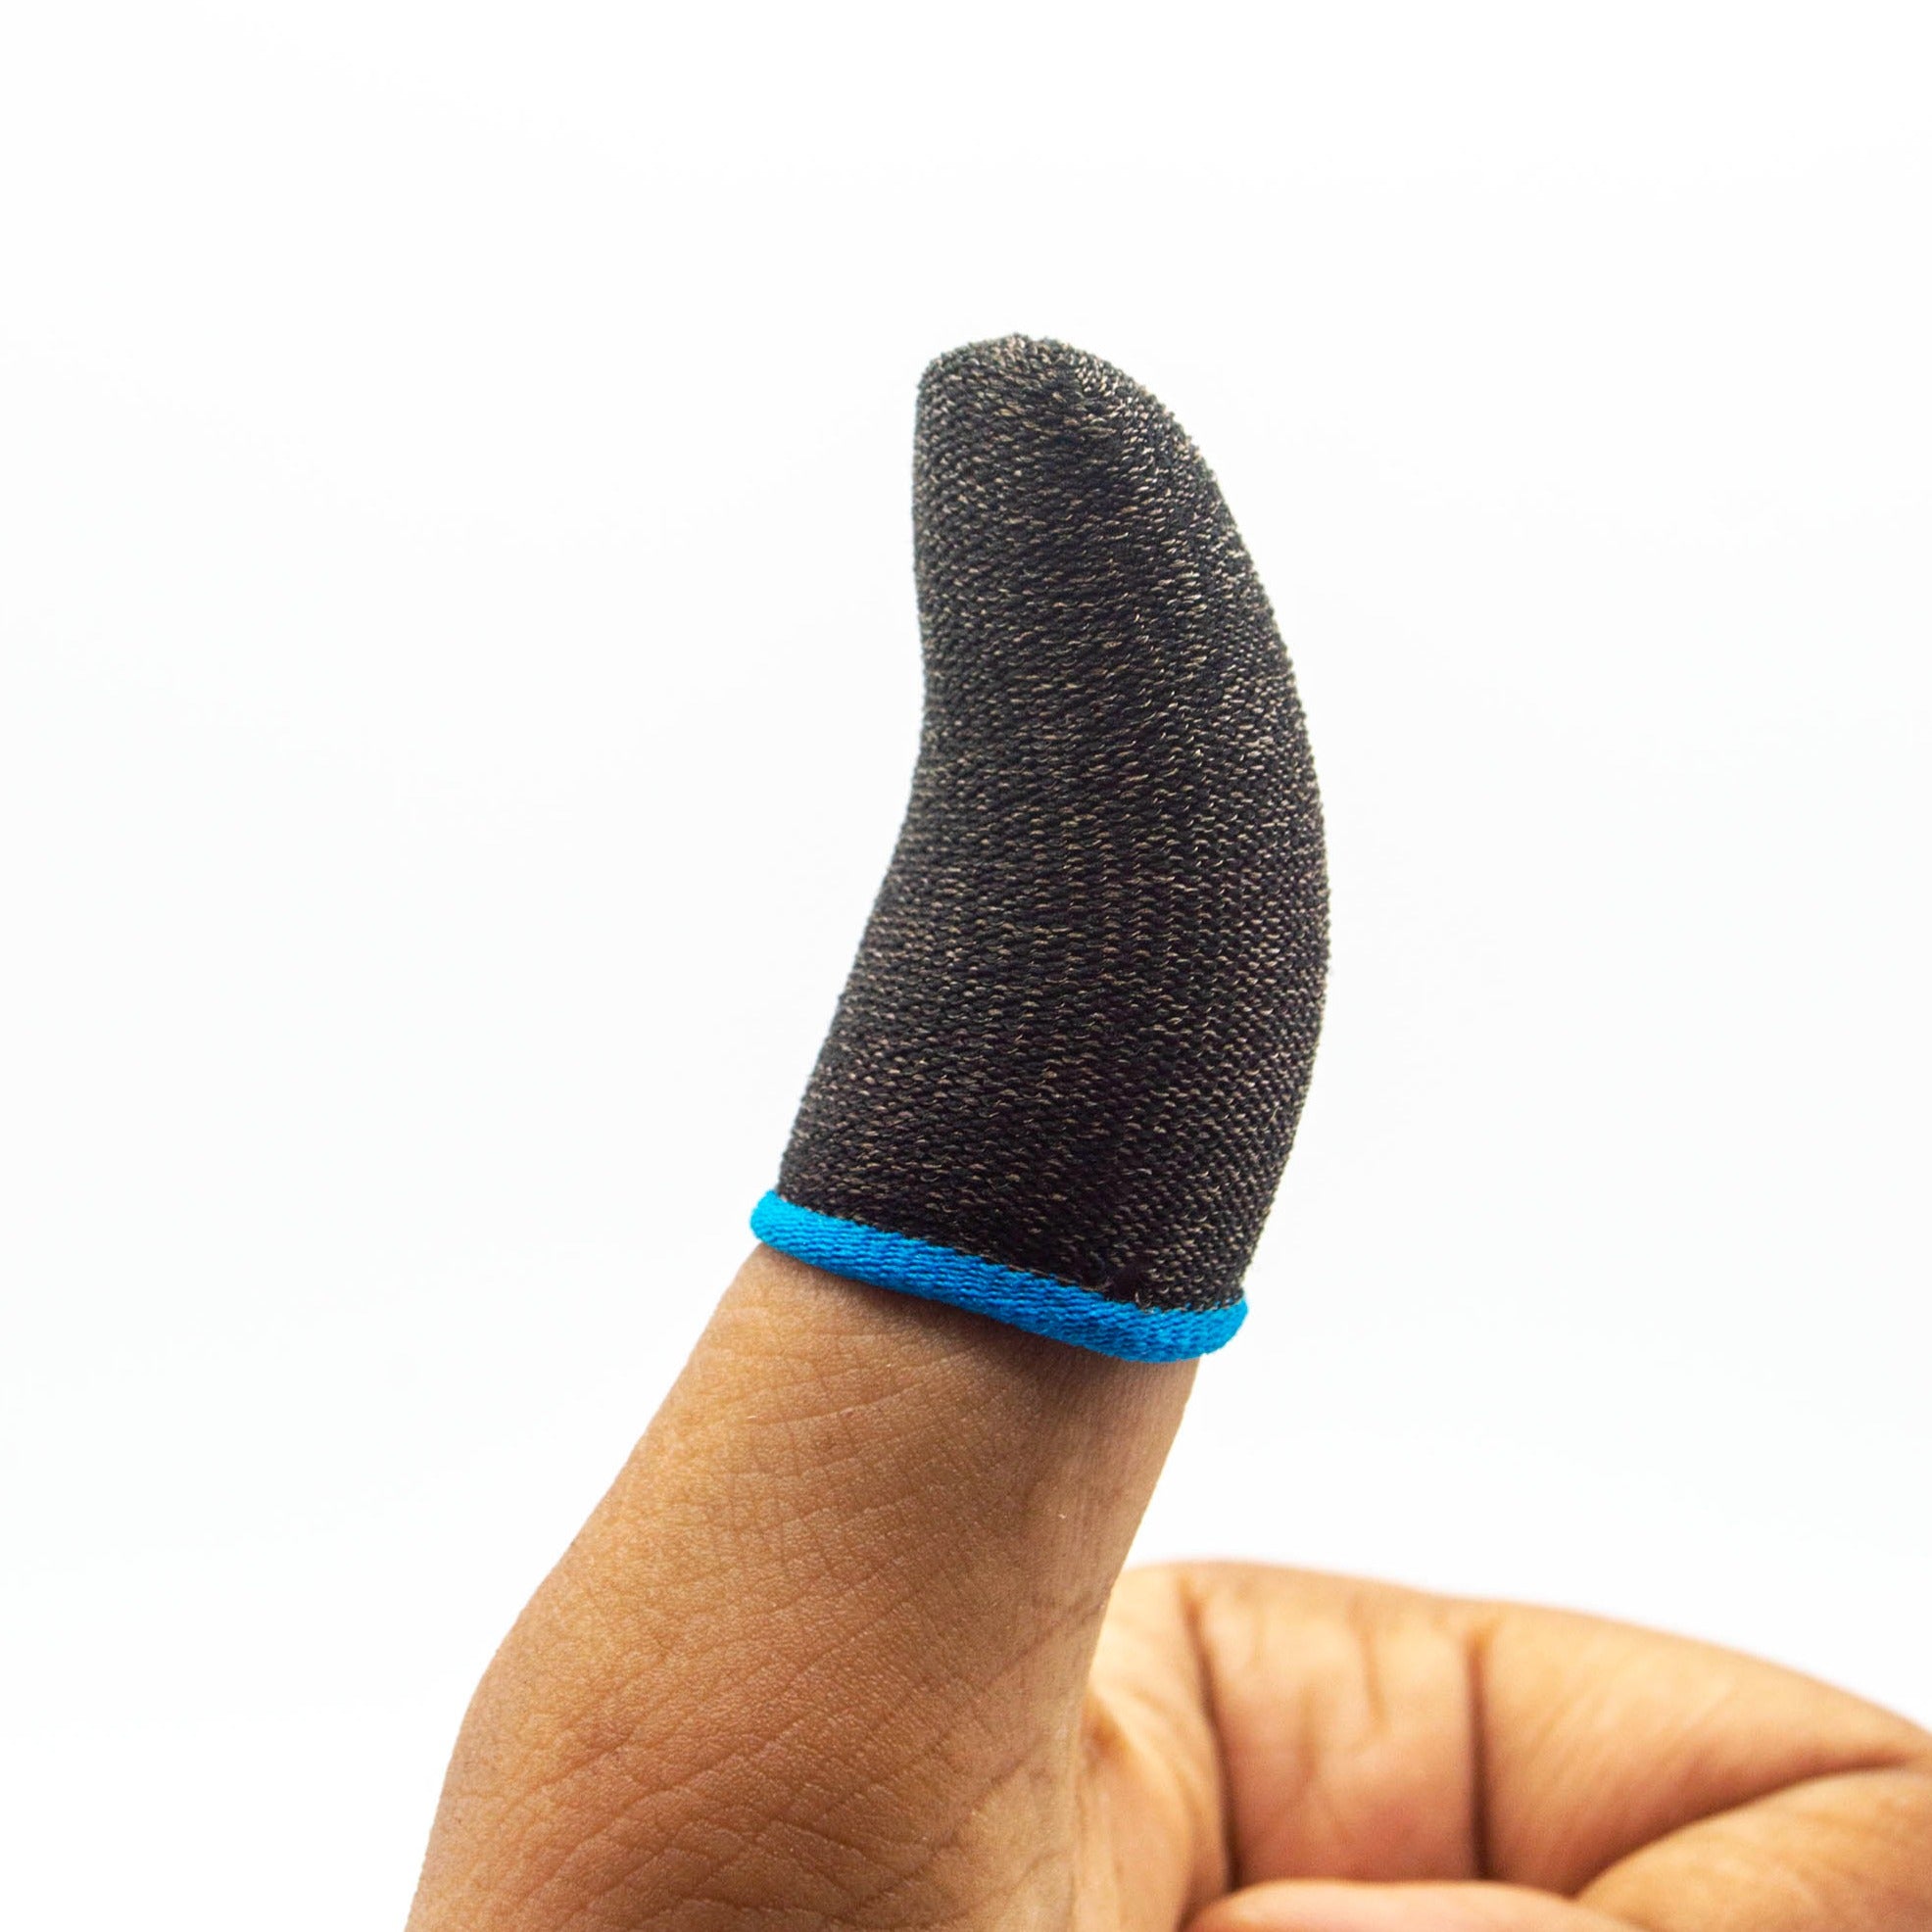 Finger sleeves (For mobile gaming)